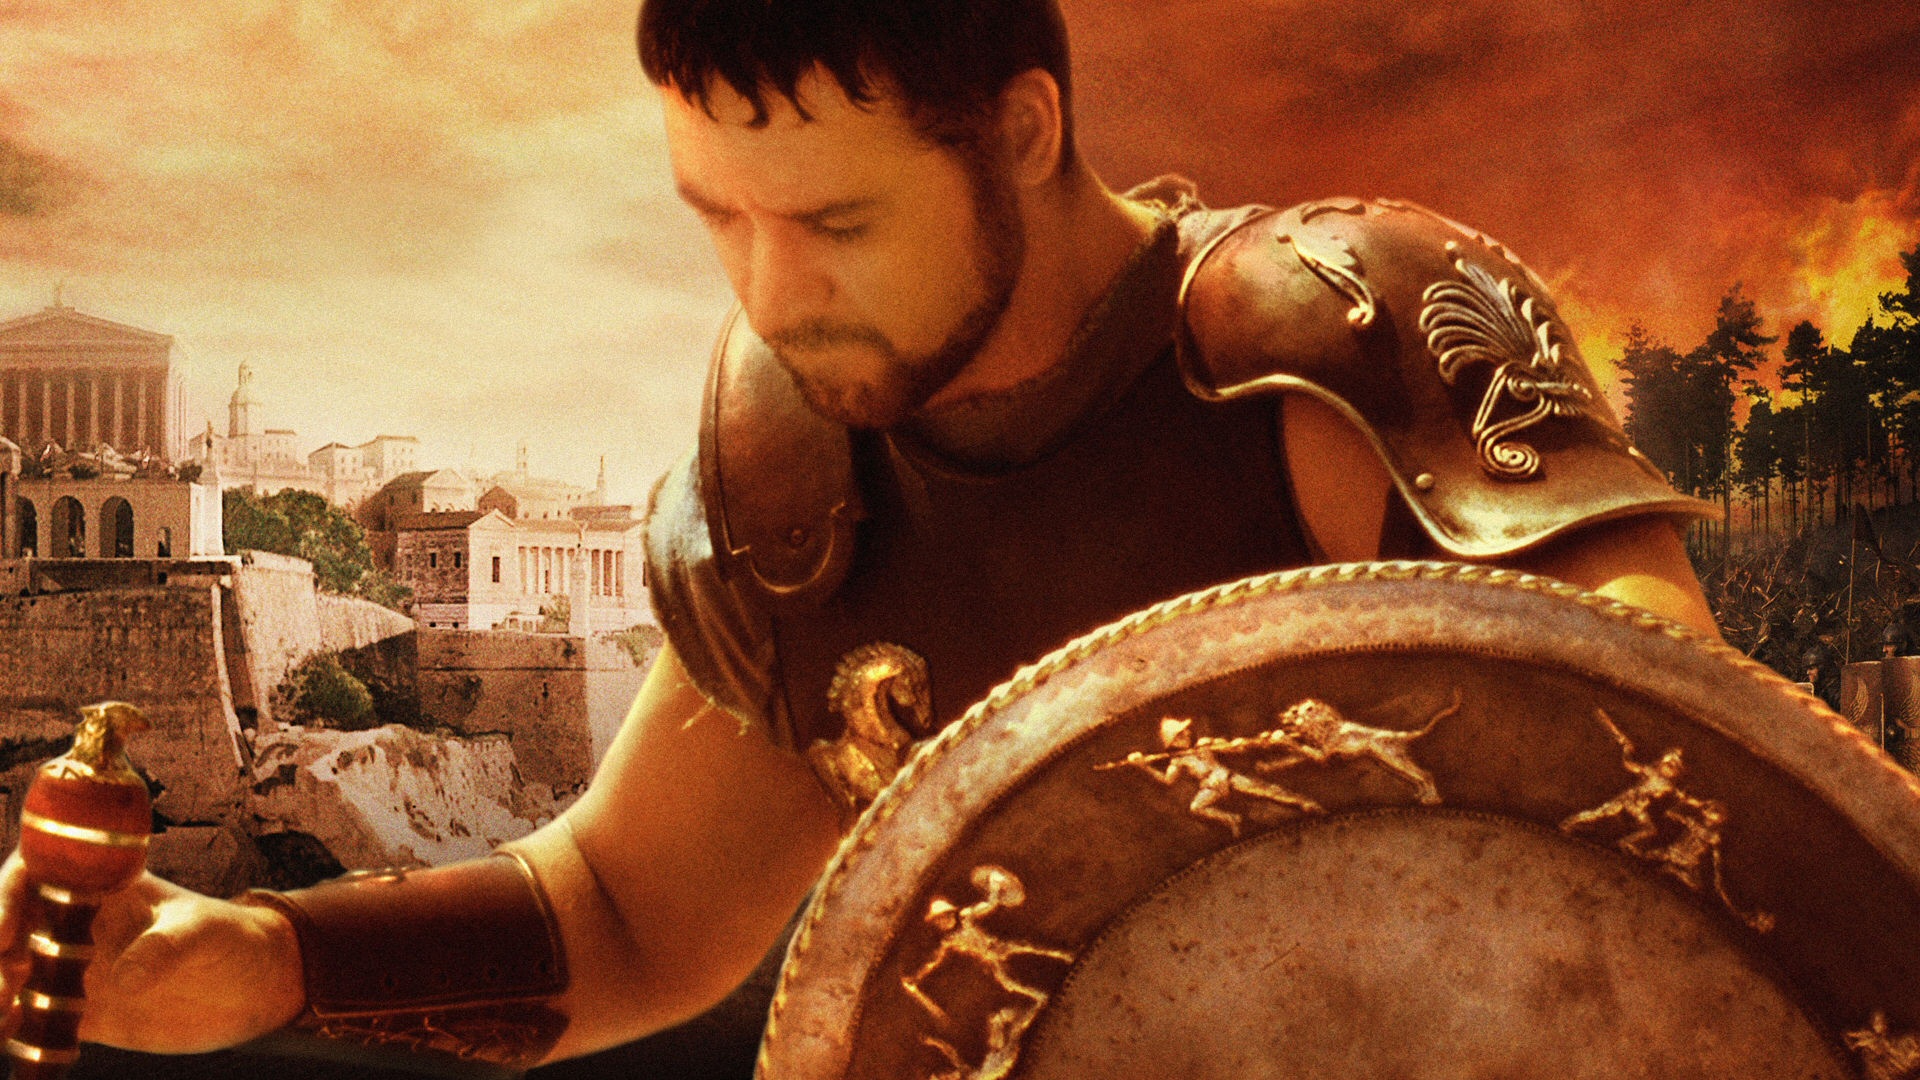 Gladiator Theme Song | Movie Theme Songs & TV Soundtracks
